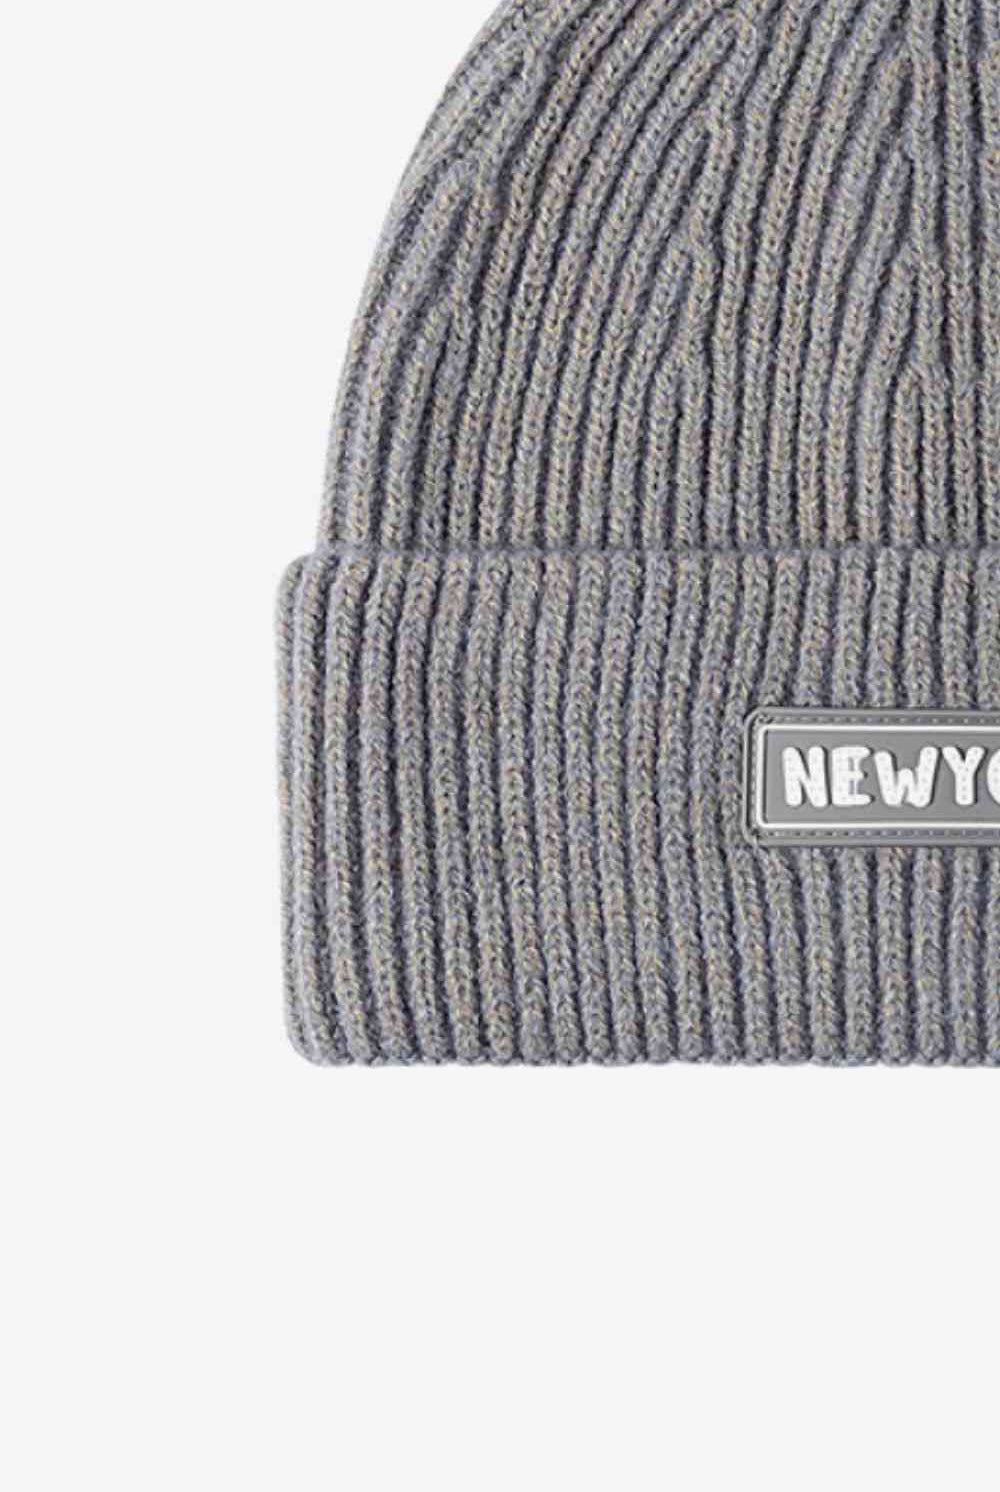 Dim Gray NEWYORK Patch Rib-Knit Cuffed Beanie Winter Accessories